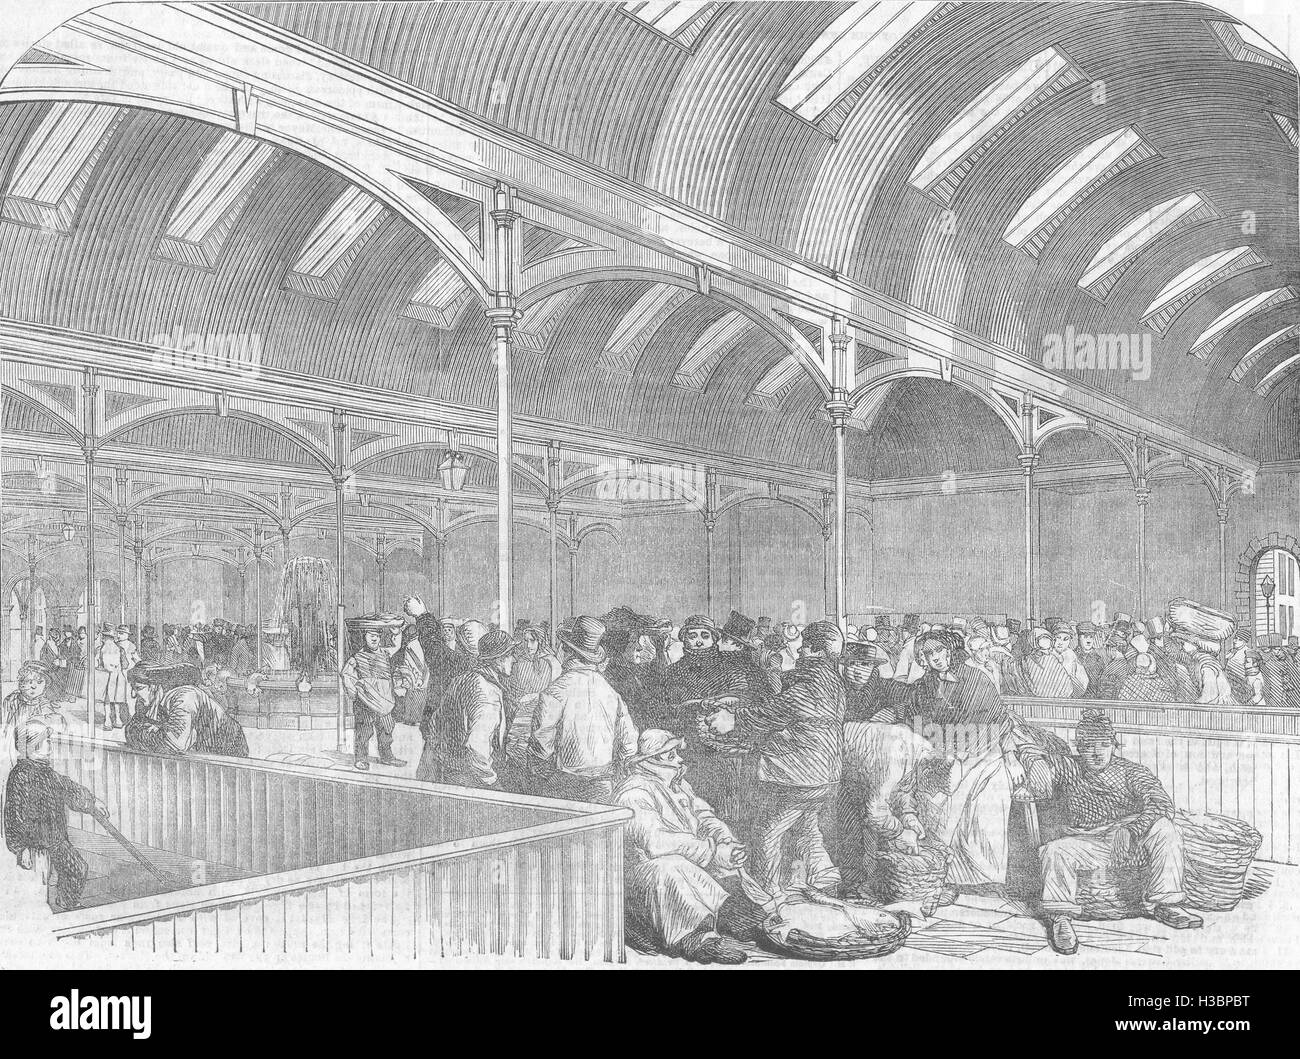 LONDON Billingsgate New Market 1854. The Illustrated London News Stock Photo